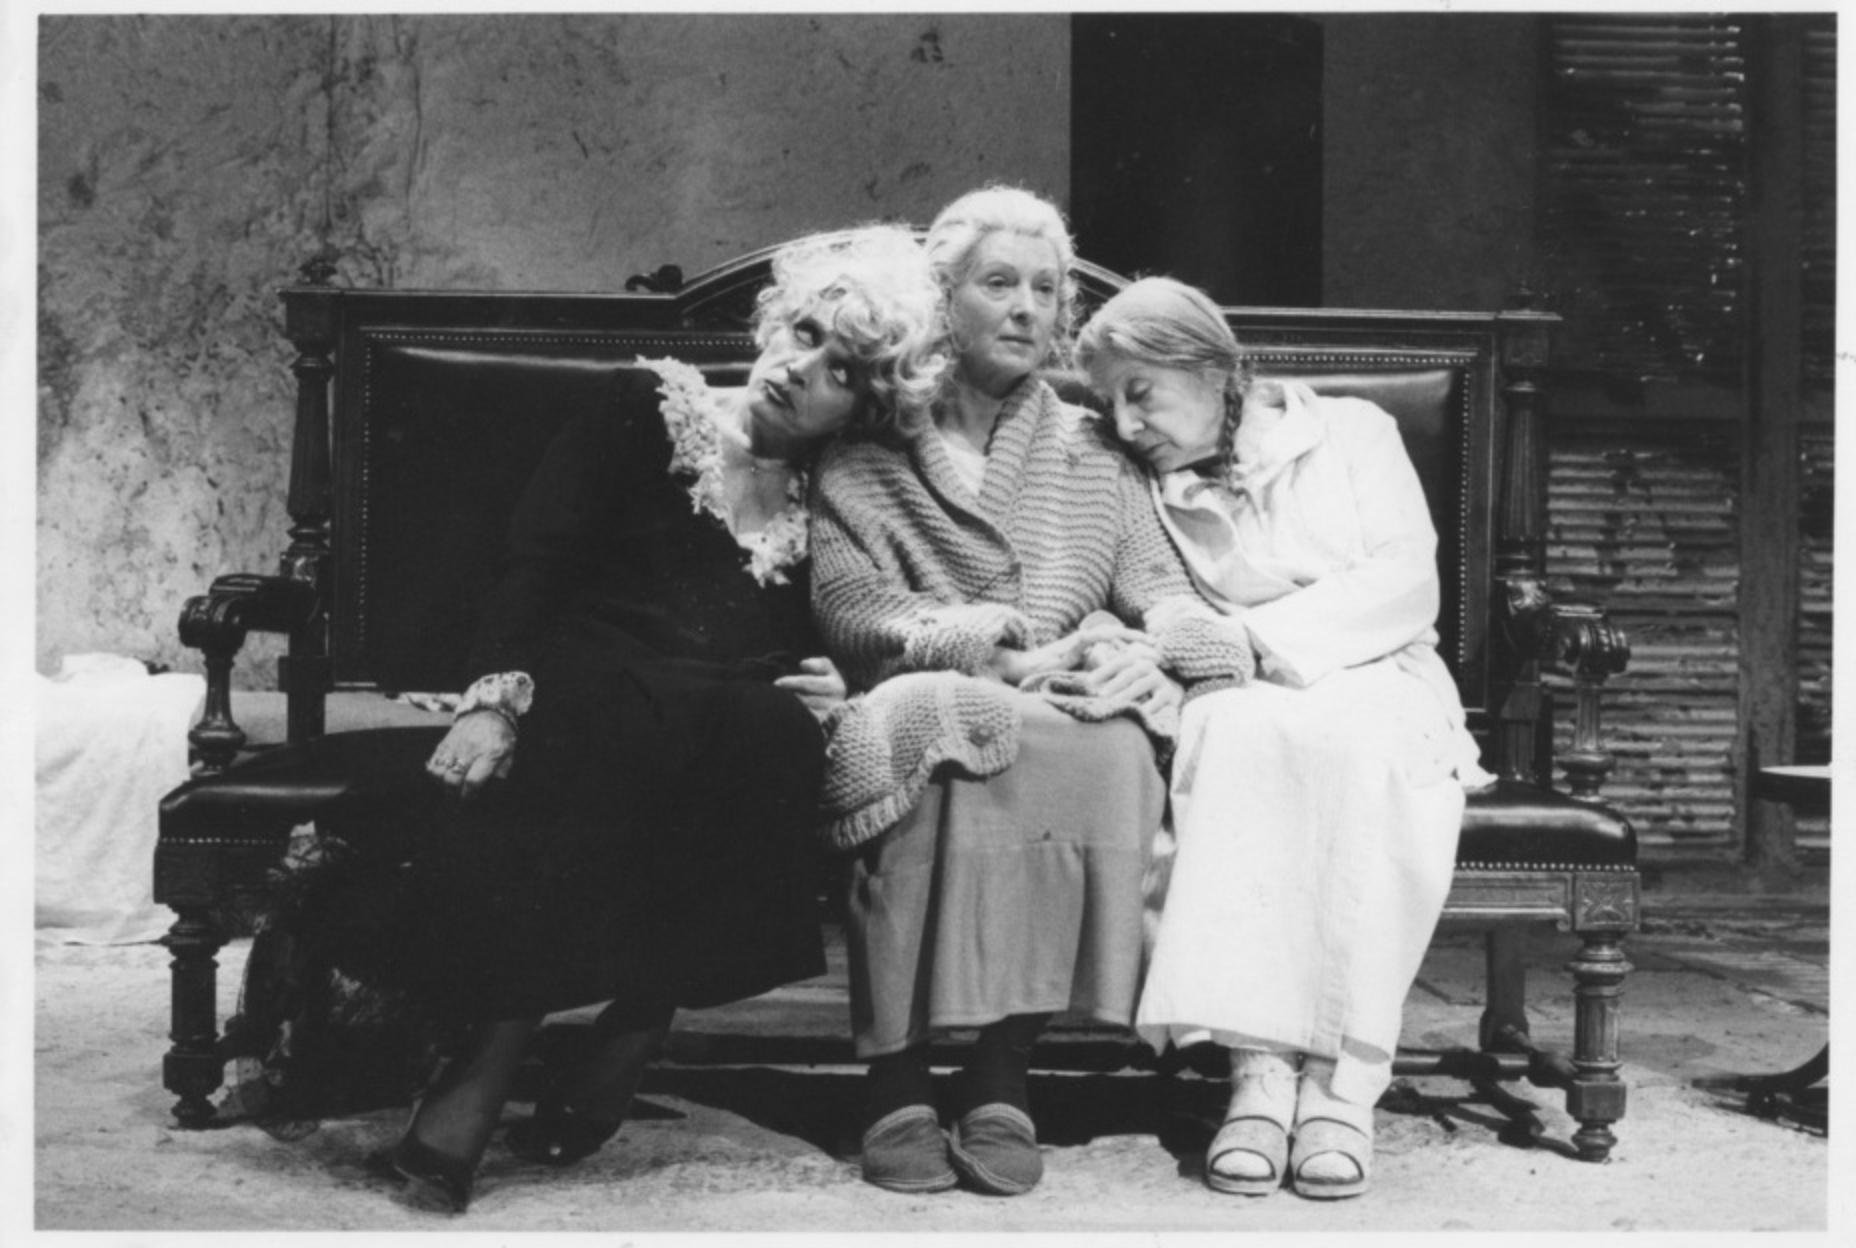 Unknown Figurative Photograph - The Actresses Paola Borboni, Diana Dei and Franca Maresa - Vintage Photo -1980s